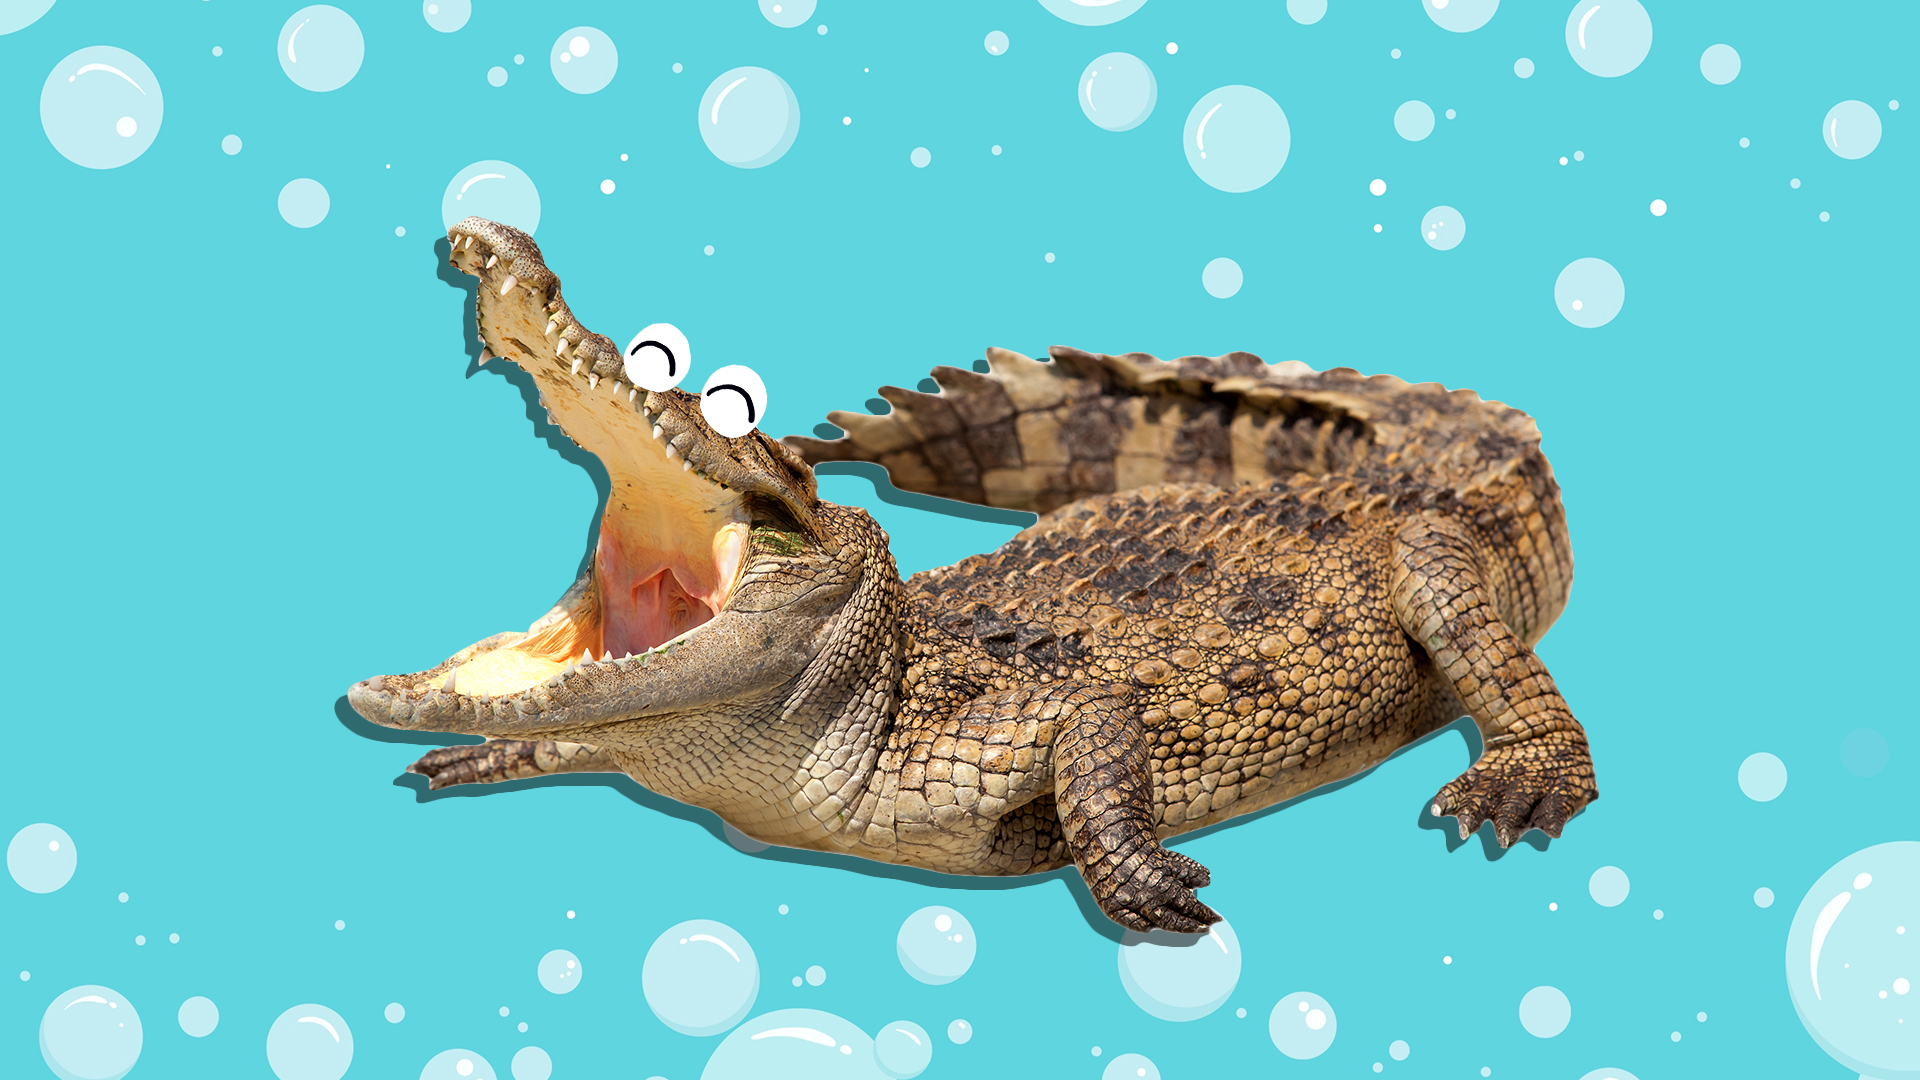 A laughing crocodile